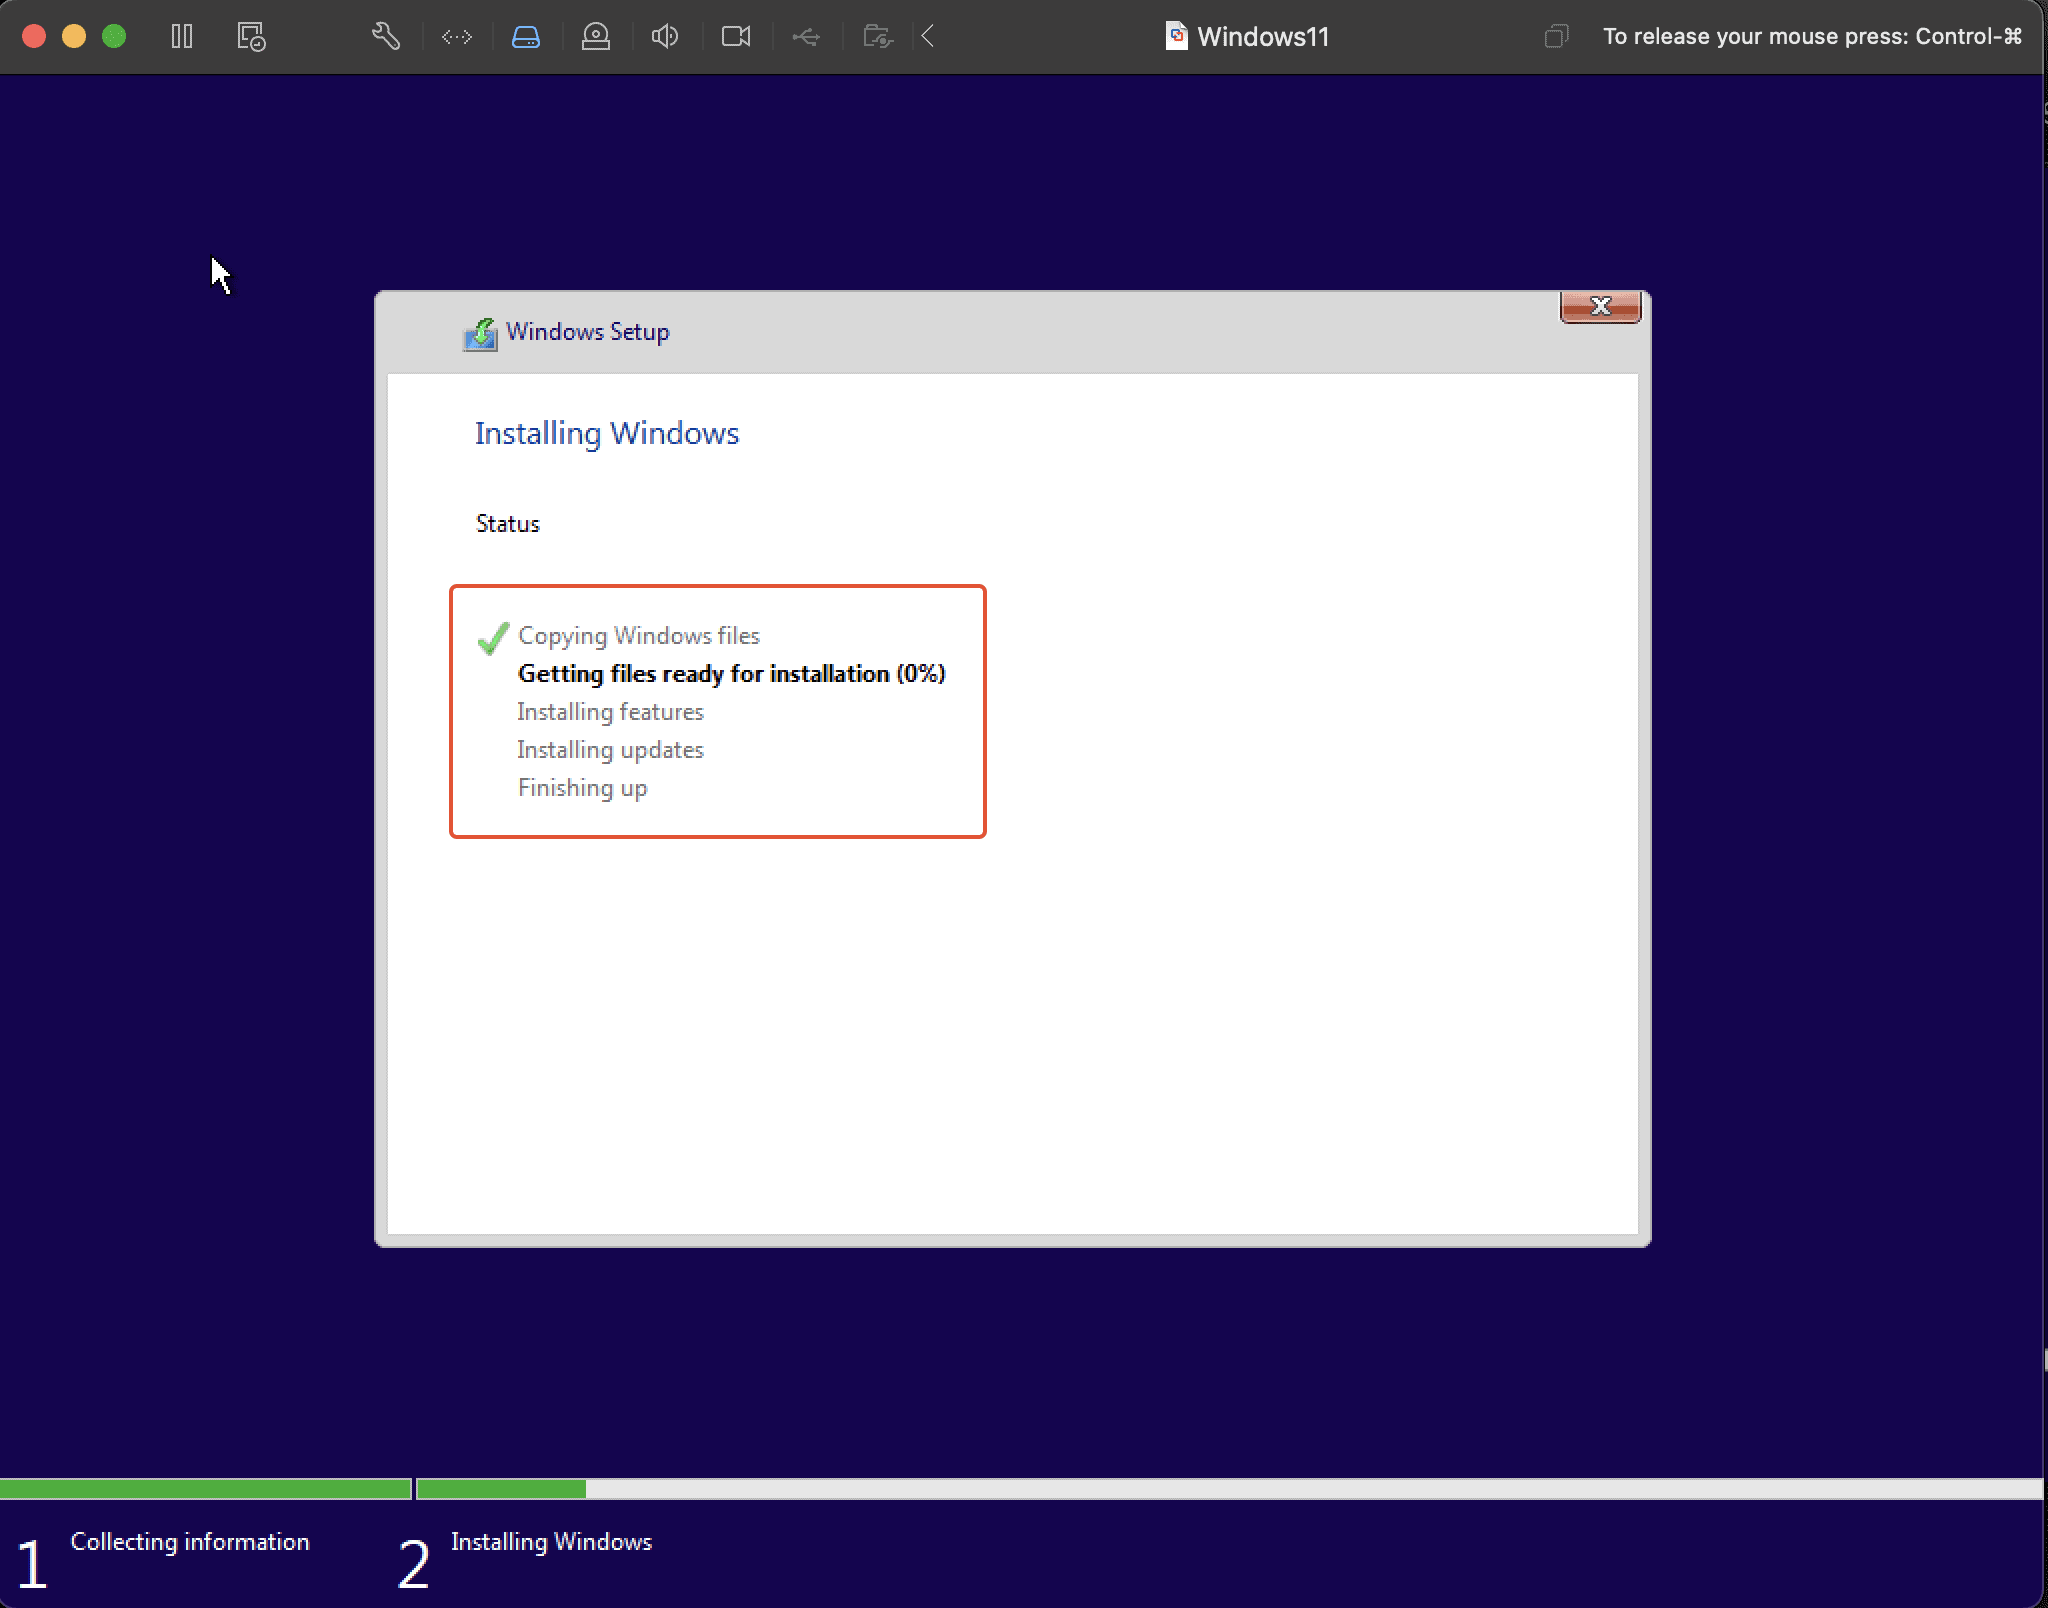 Installation Of Windows 11 Is In Progress